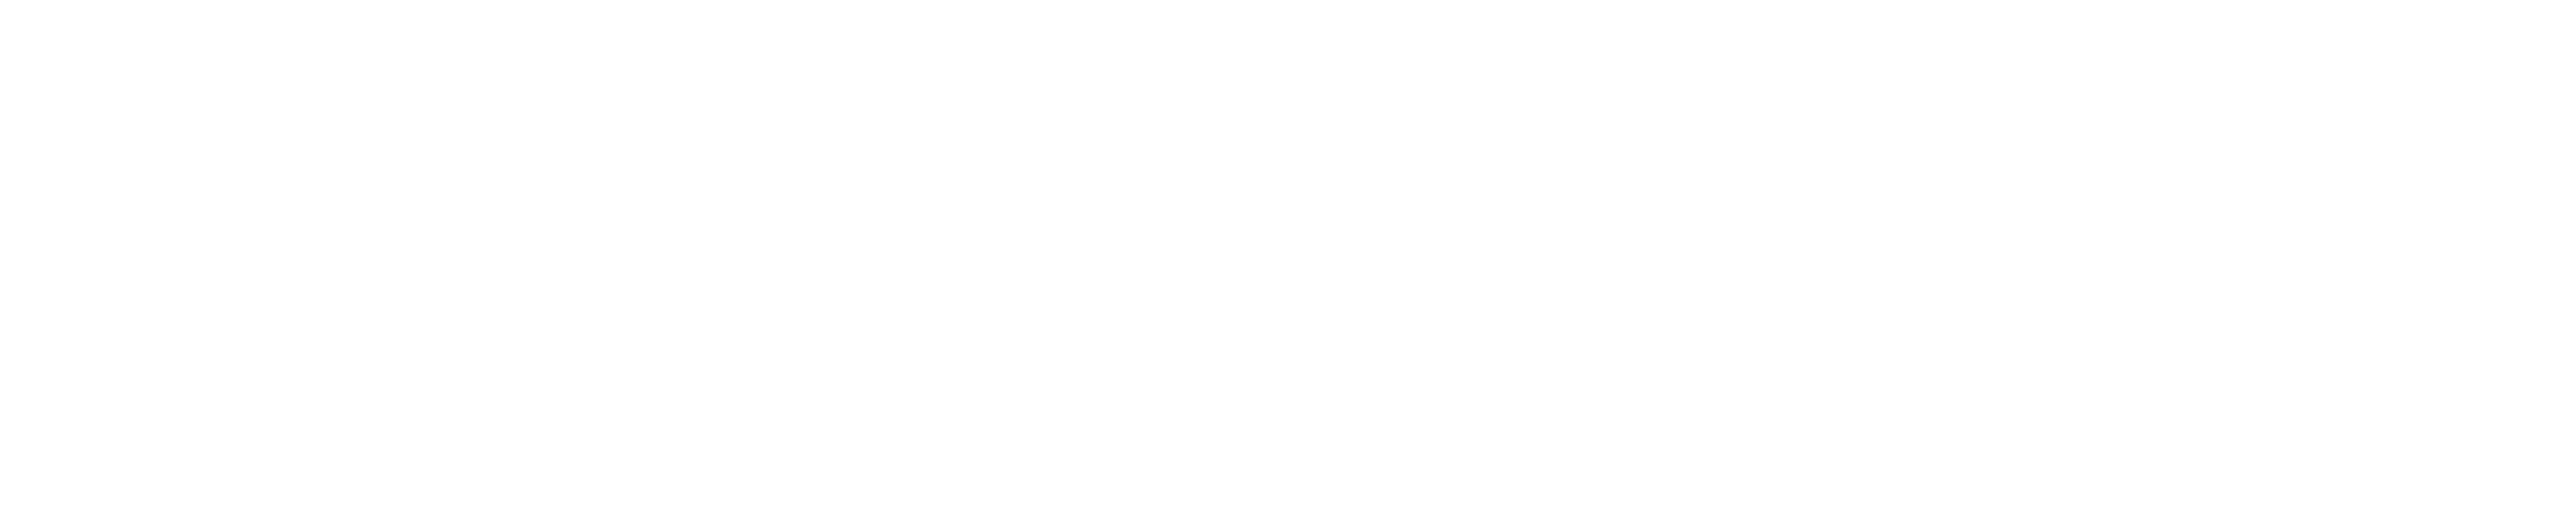 Universidad de Cádiz